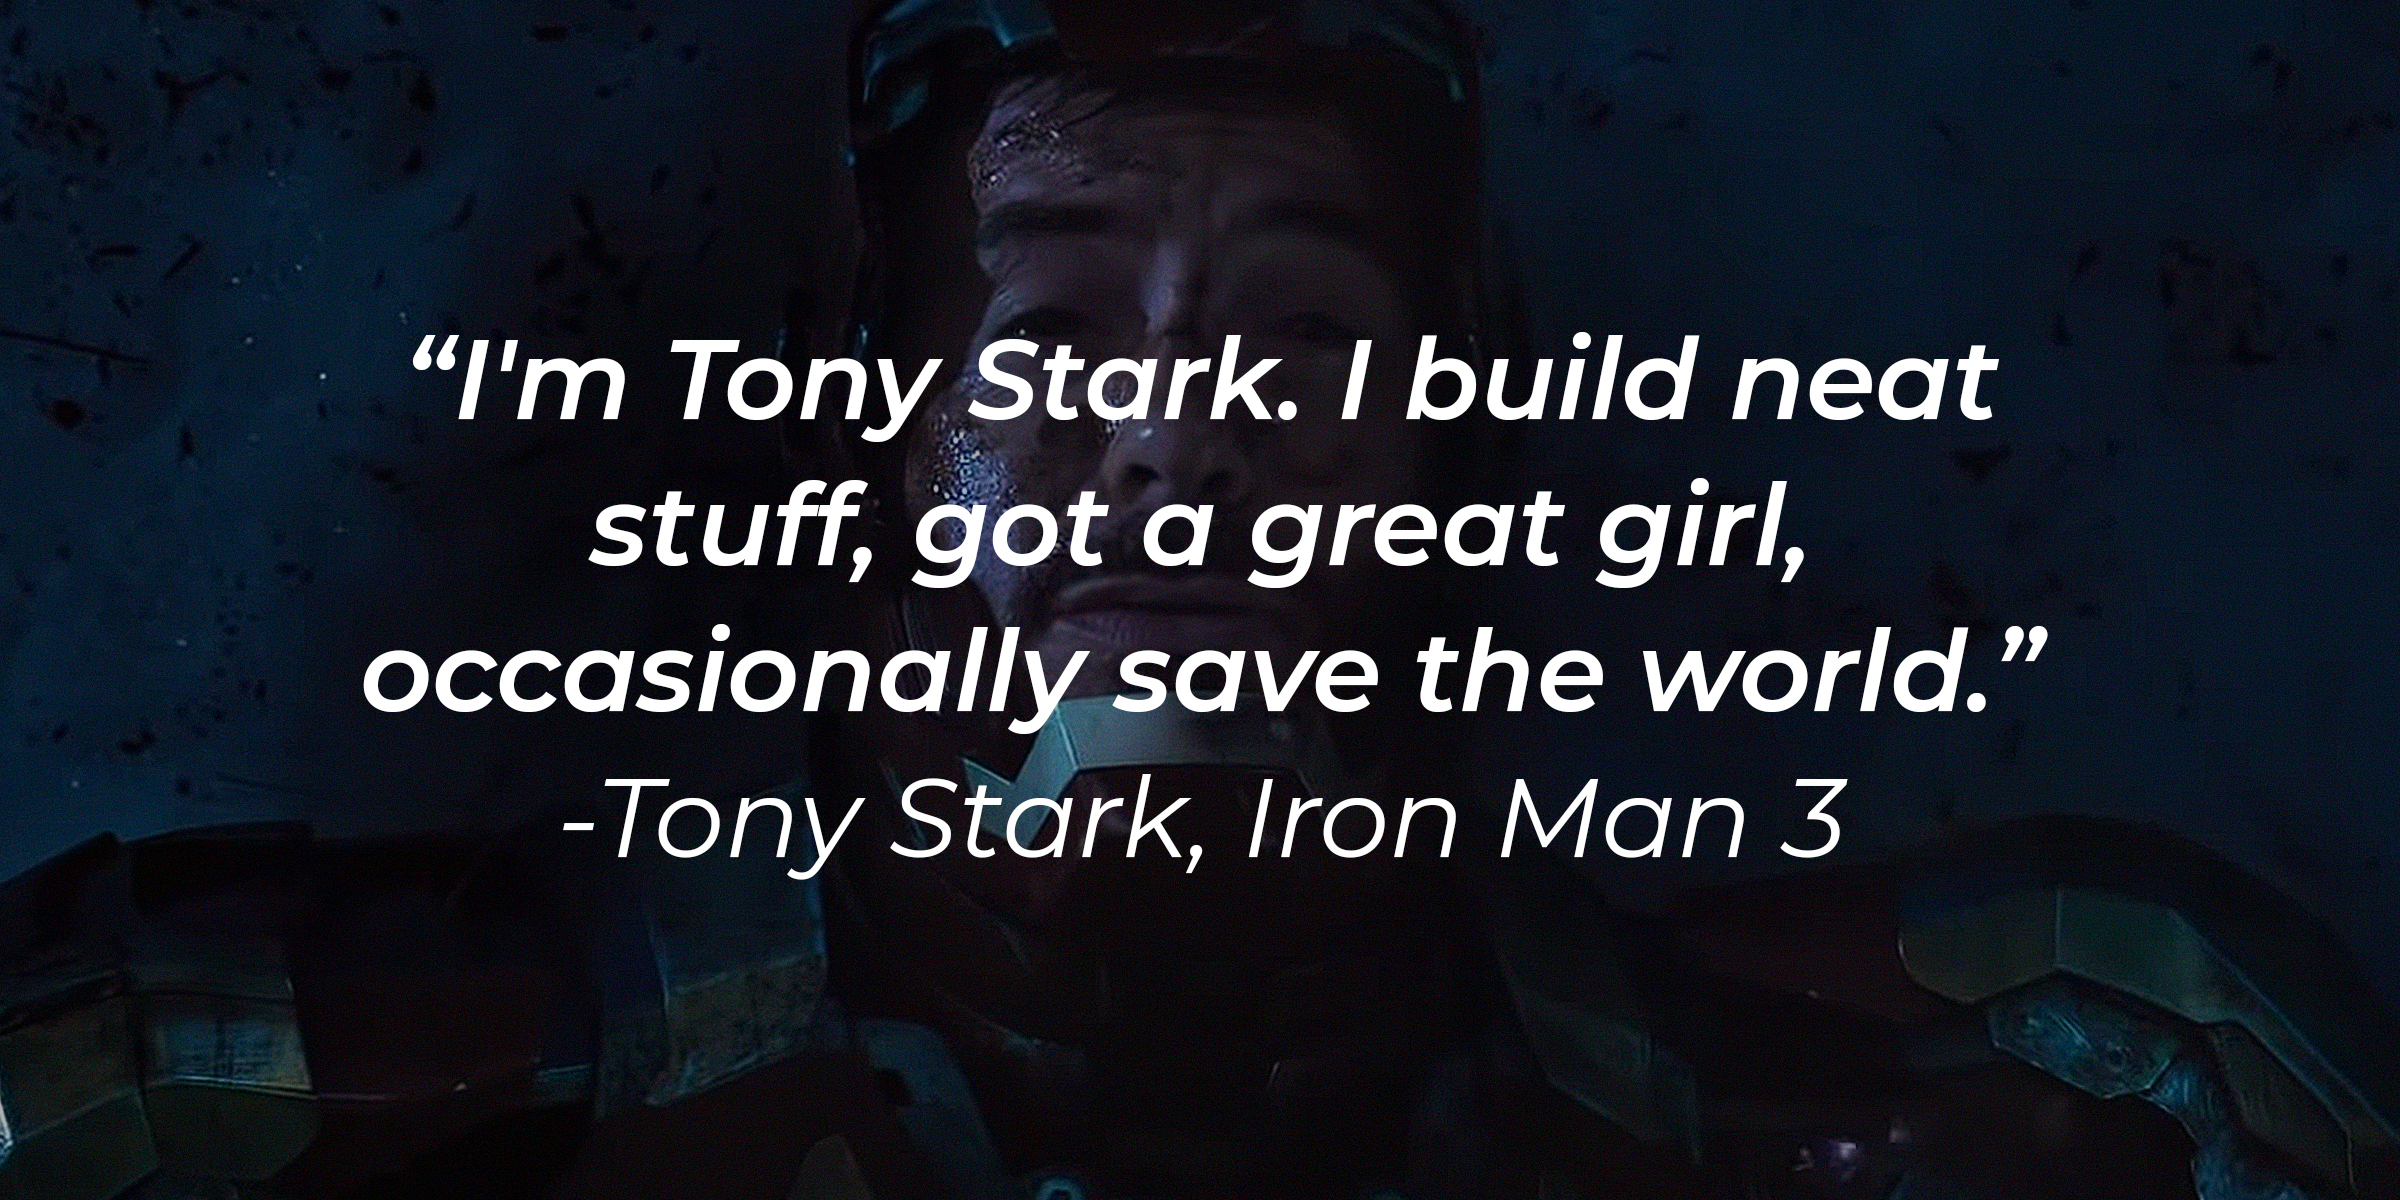 Tony Stark's quote: “I'm Tony Stark. I build neat stuff, got a great girl, occasionally save the world.” | Image: youtube.com/MarvelUK